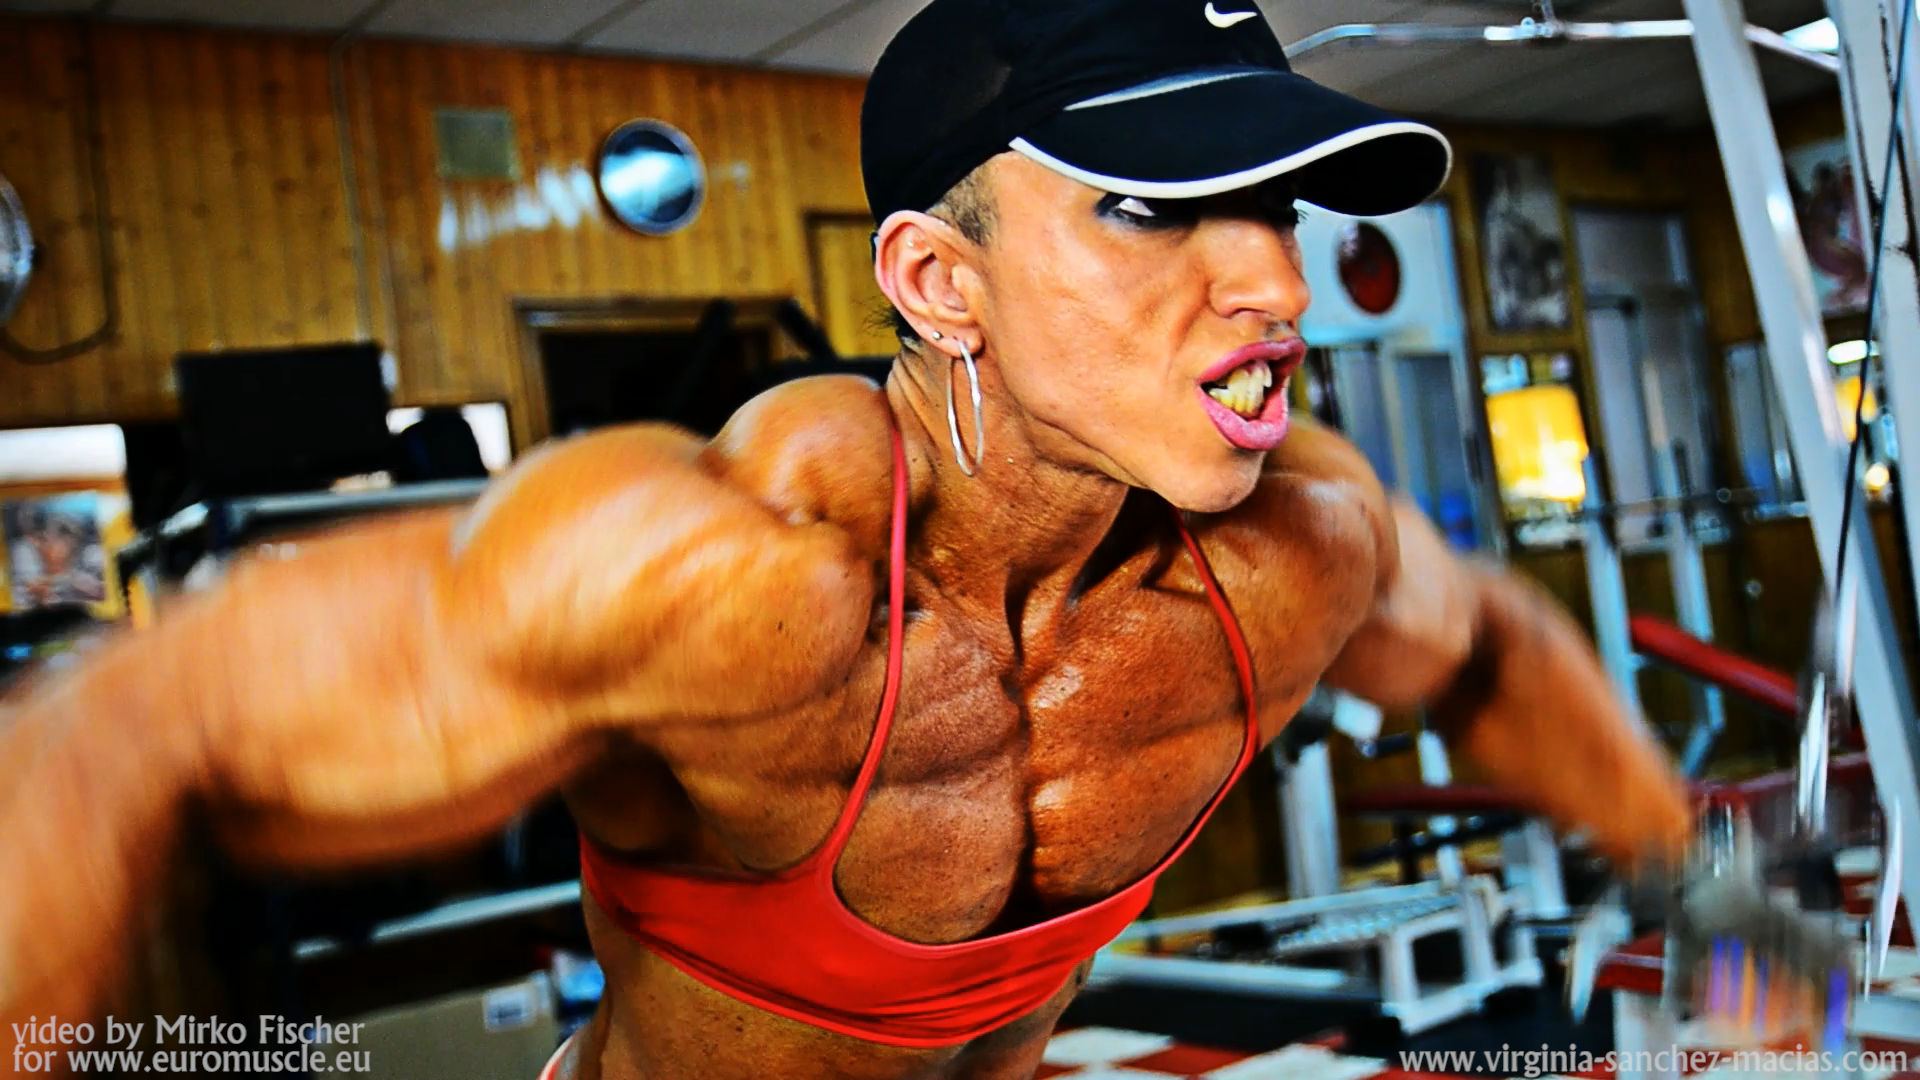 Virginia sanchez bodybuilder